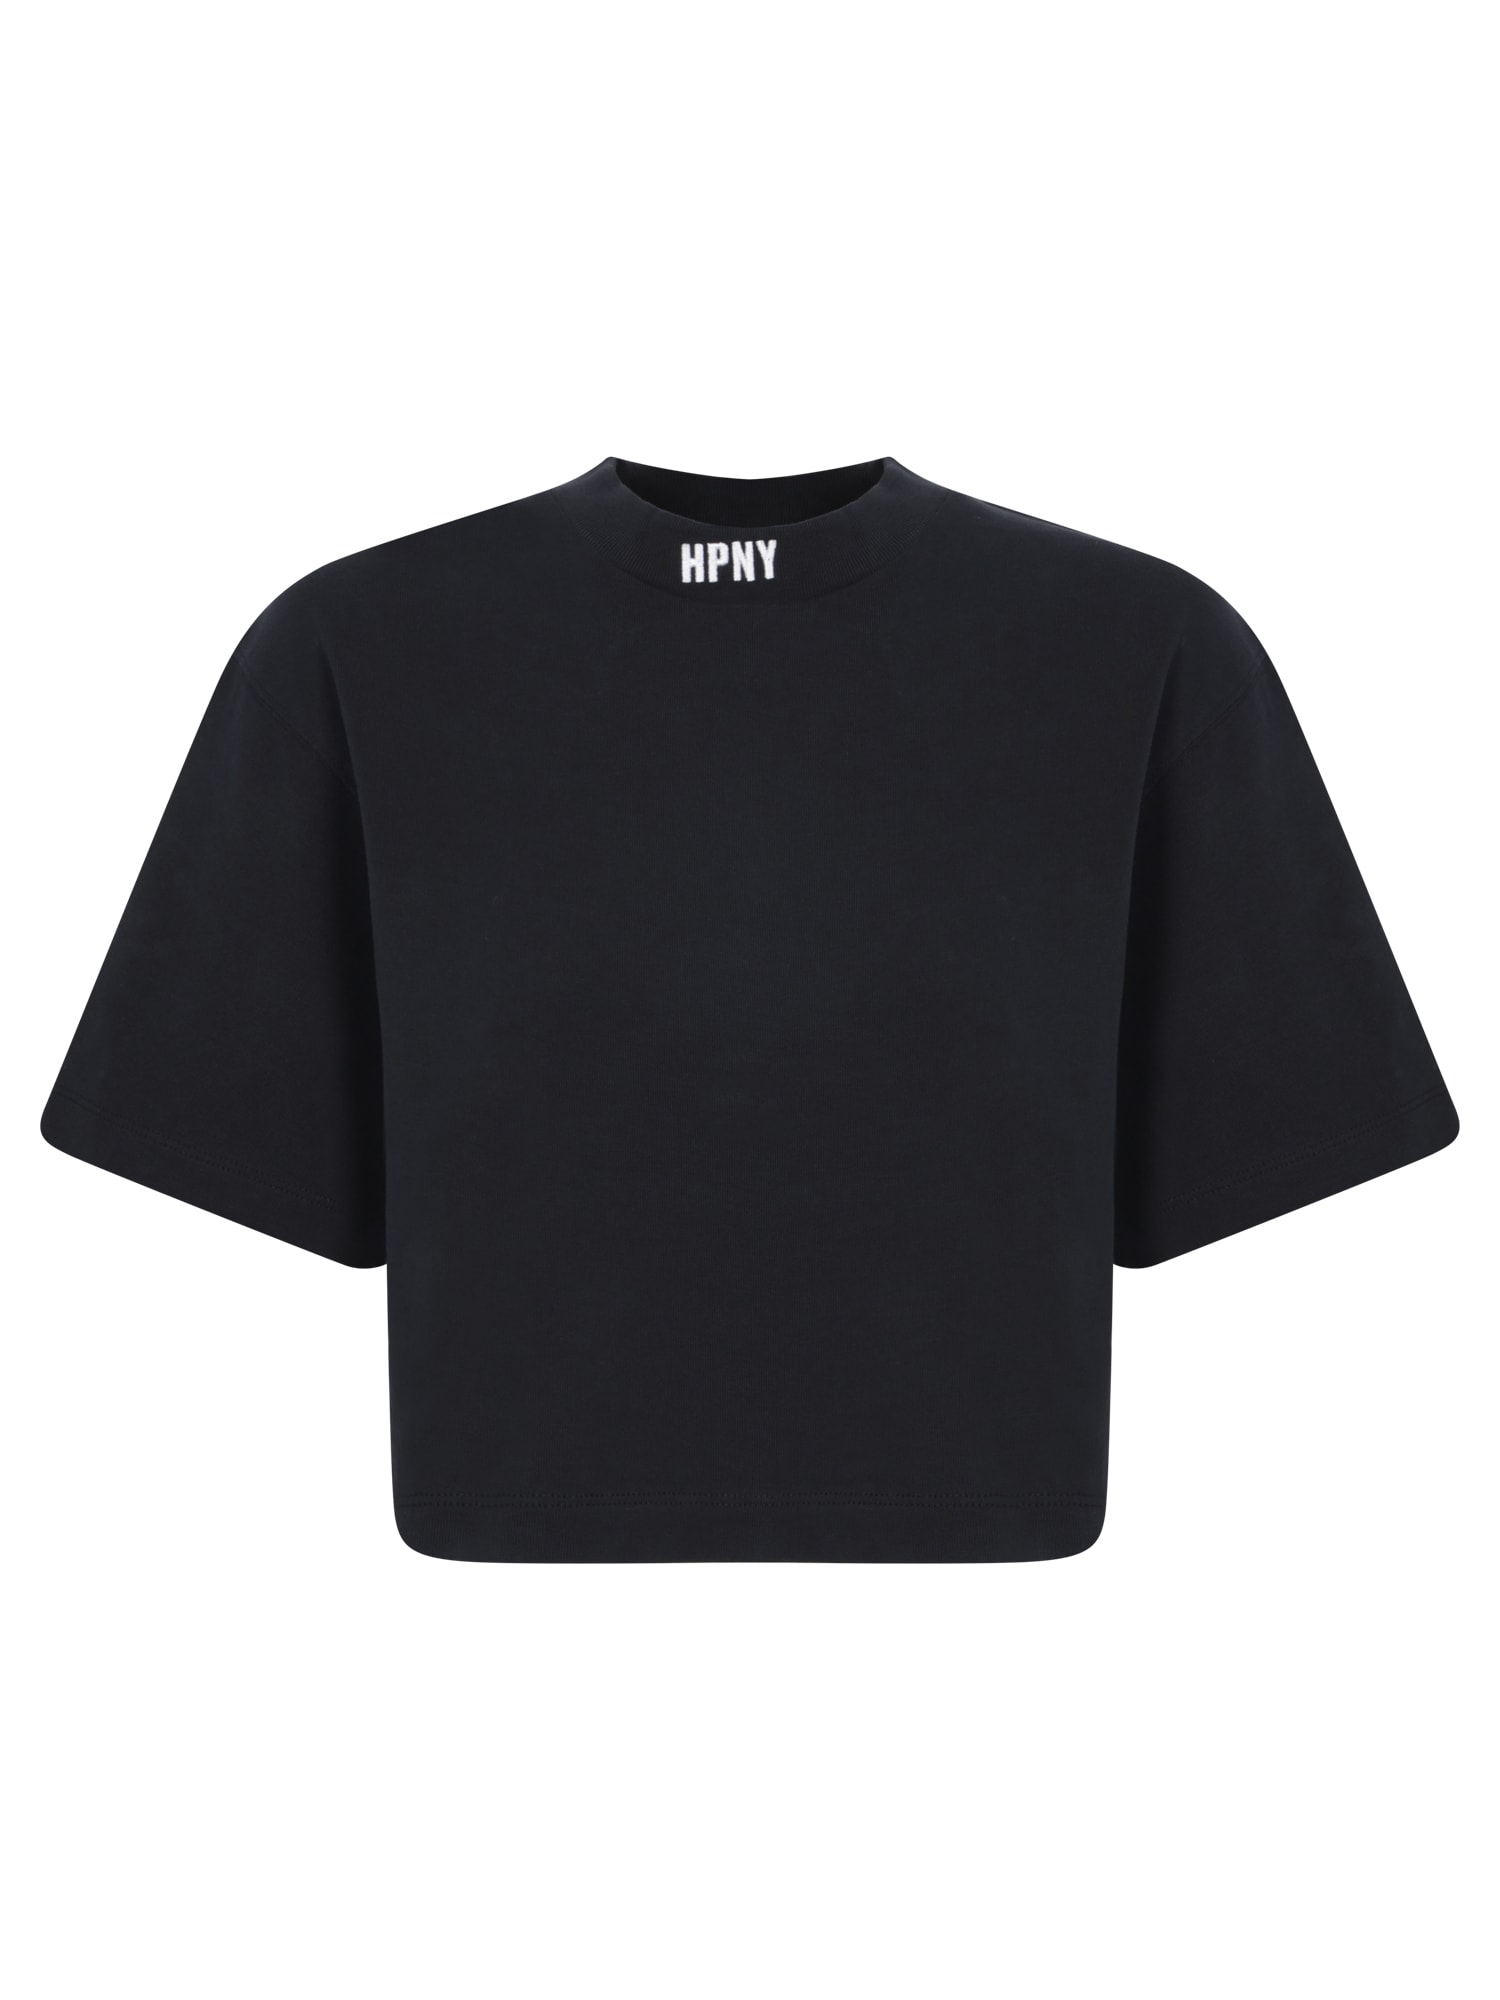 HERON PRESTON Black Crop T-shirt